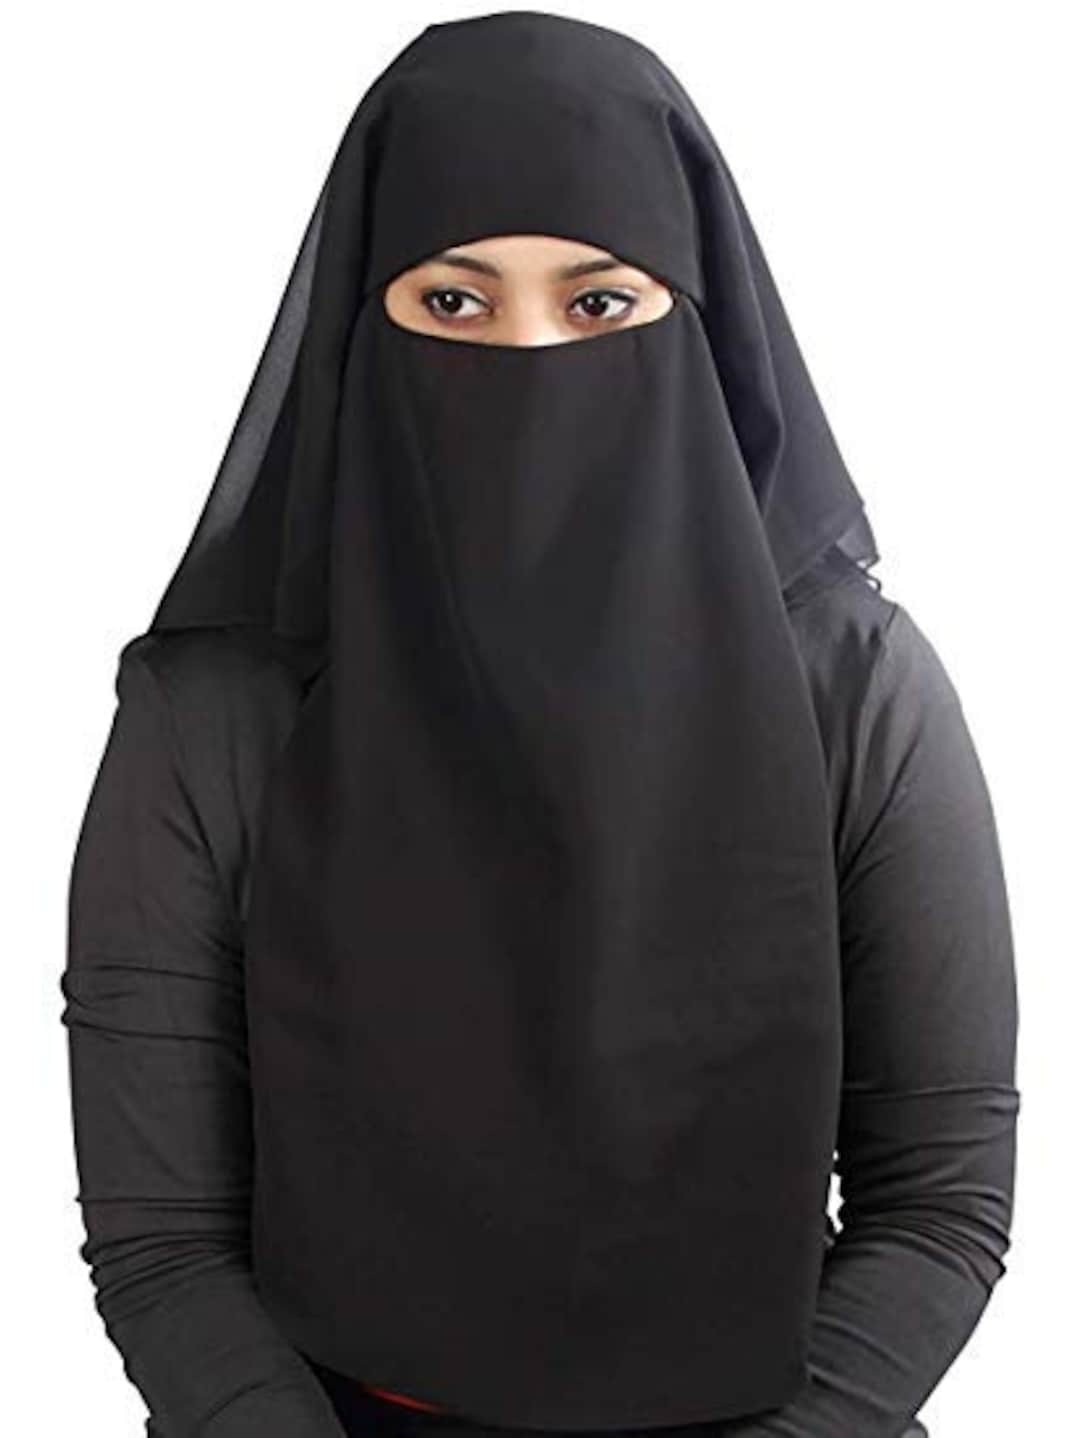 Layer Niqab Abaya Jilbab Khimar Burqa Head Scarf Face Cover Black Face